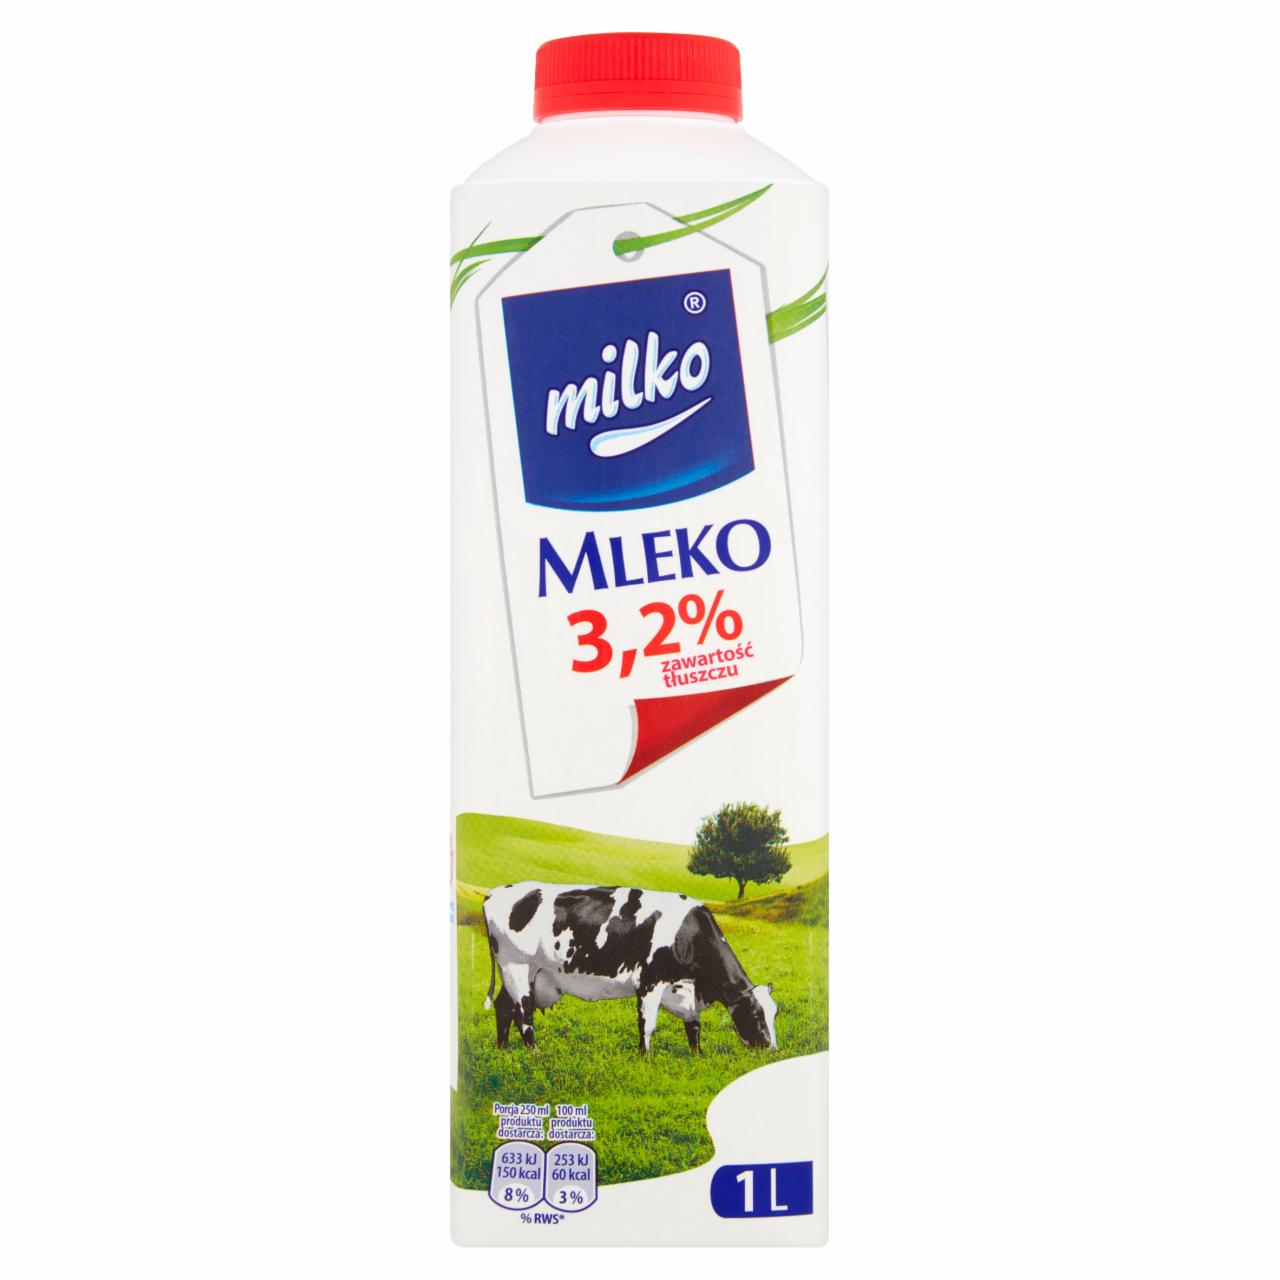 Zdjęcia - Milko Mleko 3,2% 1 l